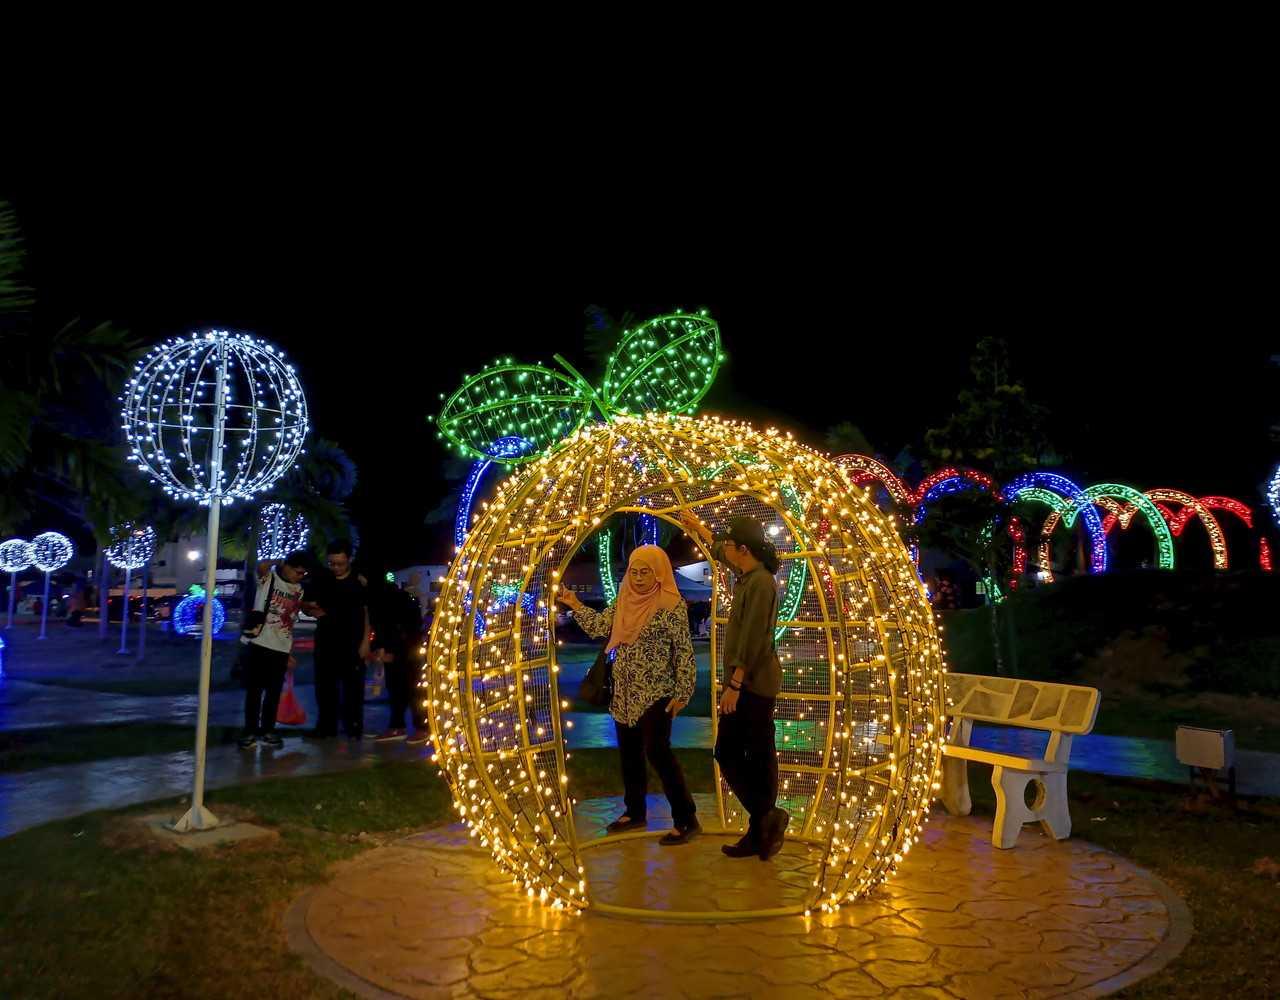 Visitors admire the lights and decorations at Laman Orang Kampung in Merlimau, Jasin. Photo: Bernama